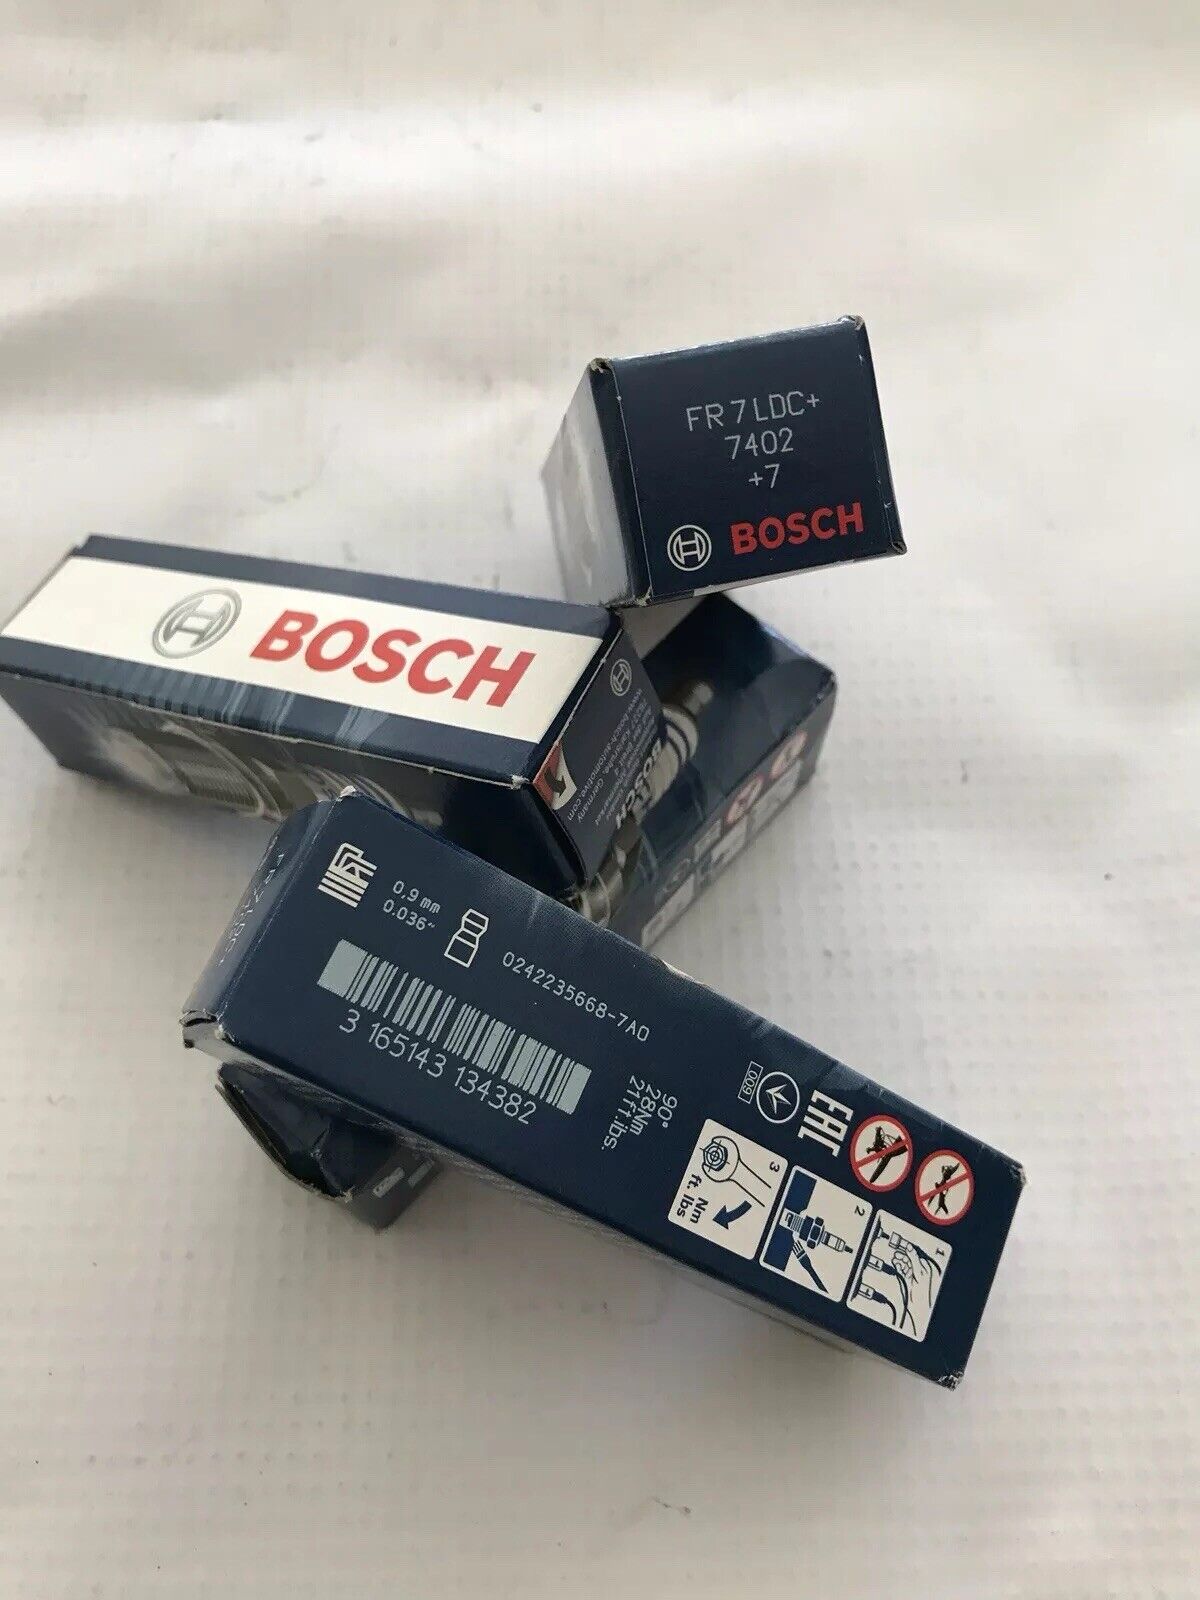 Bosch Super Spark Plug 7402 FR7LDC Original Box 1 set of 4 Plugs 0242235668